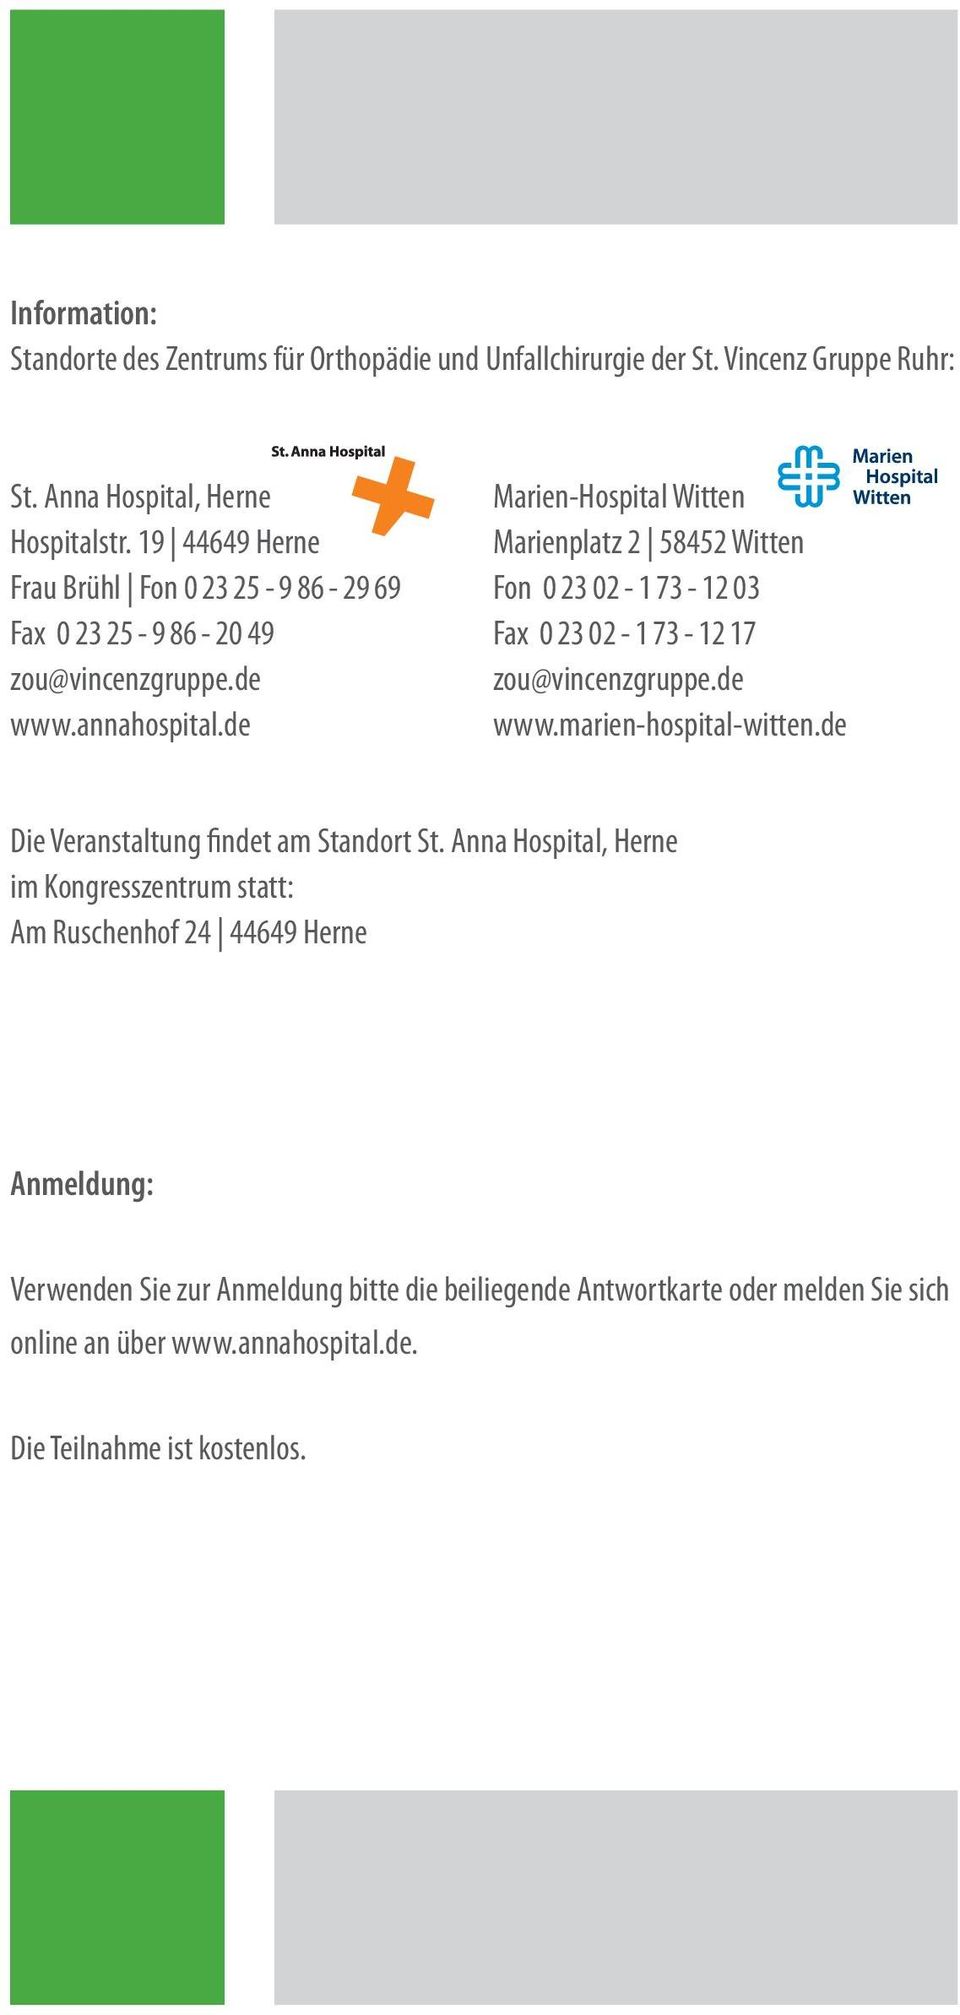 de Marien-Hospital Witten Marienplatz 2 58452 Witten Fon 0 23 02-1 73-12 03 Fax 0 23 02-1 73-12 17 zou@vincenzgruppe.de www.marien-hospital-witten.